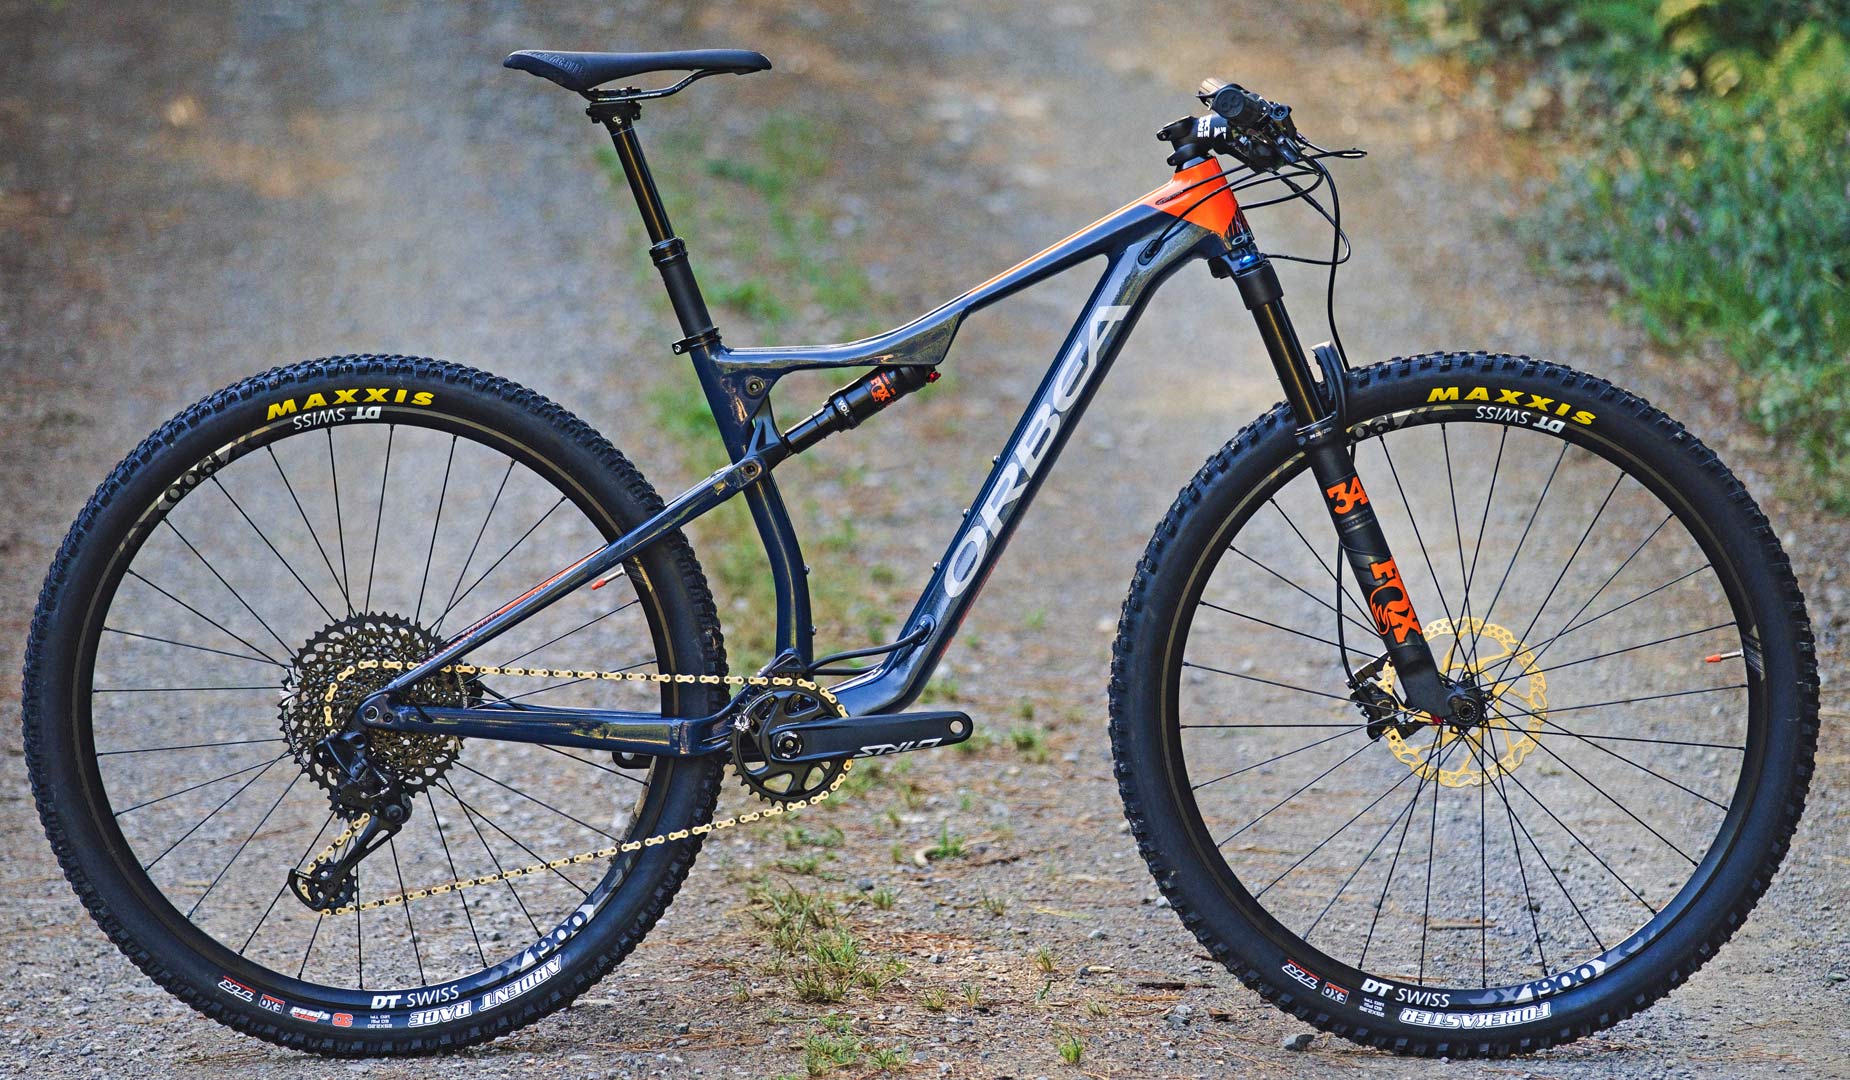 2020 Orbea Oiz H ally XC bike, affordable aluminum cross-country trail mountain bike